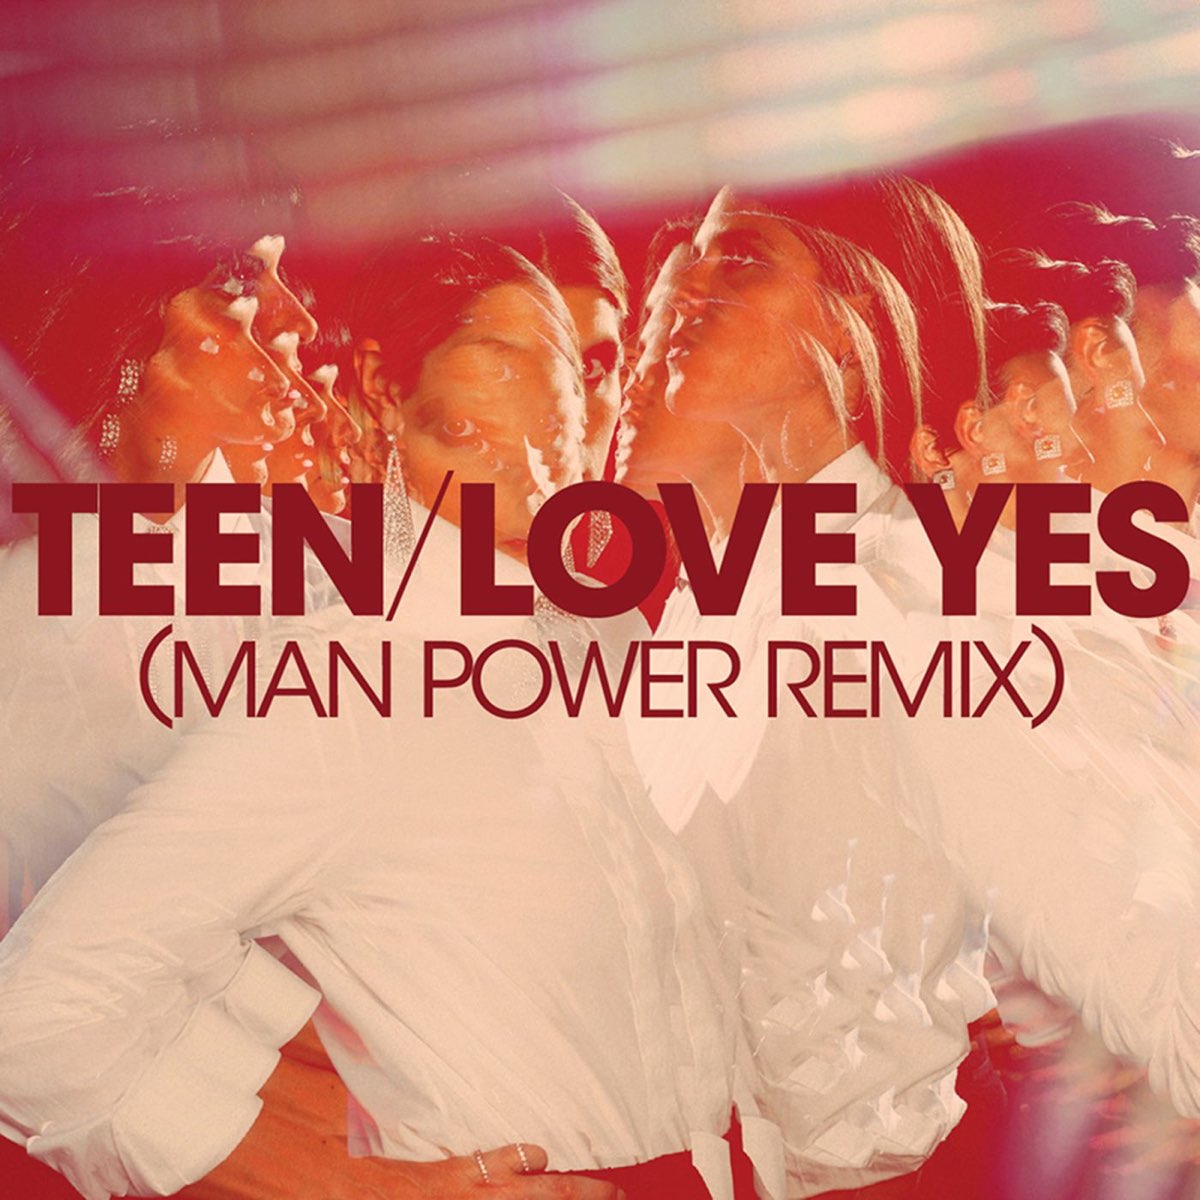 Teen Love Yes. Yes for Love. Music Power Remix. Loving Yes Hoplo. Пауэр ремикс